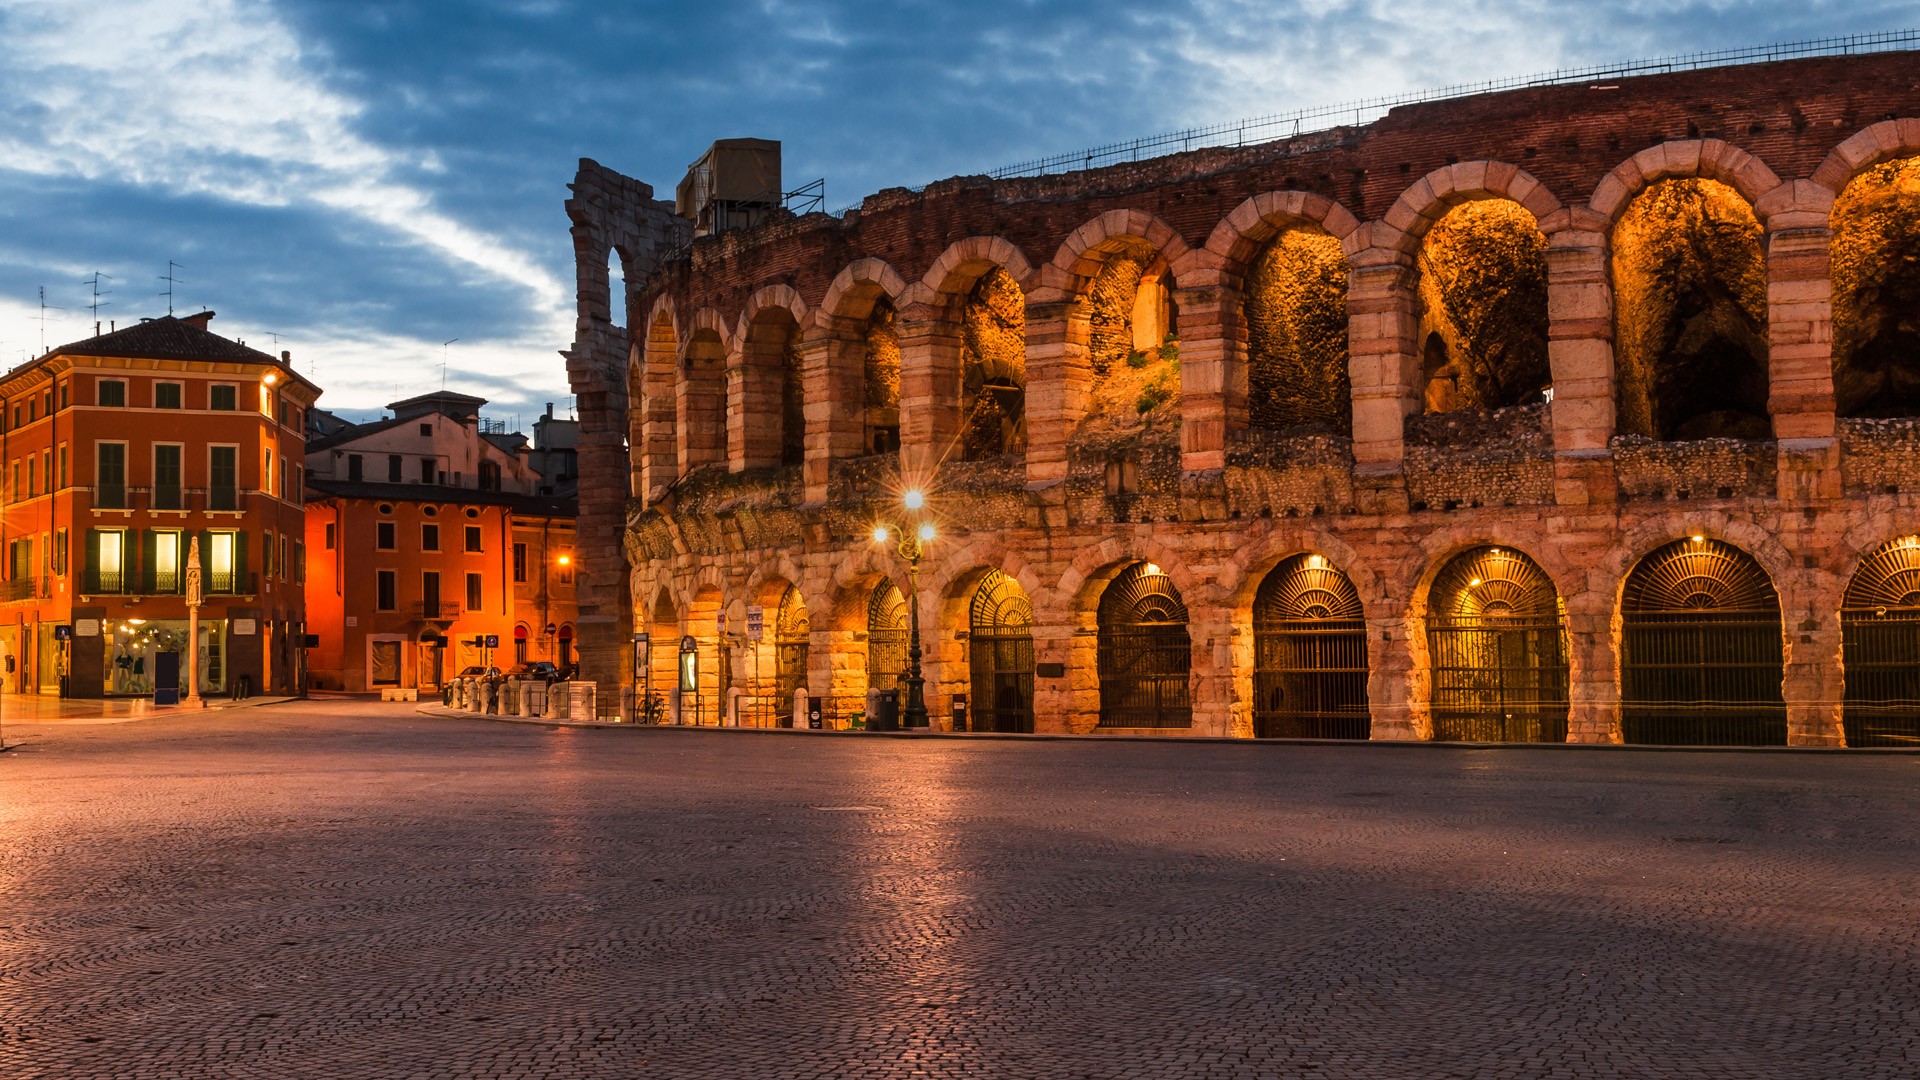 Lucht Kroniek Grote waanidee Verona Arena Roman amphitheatre at dusk time, Piazza Bra in Verona, Italy |  Windows 10 Spotlight Images